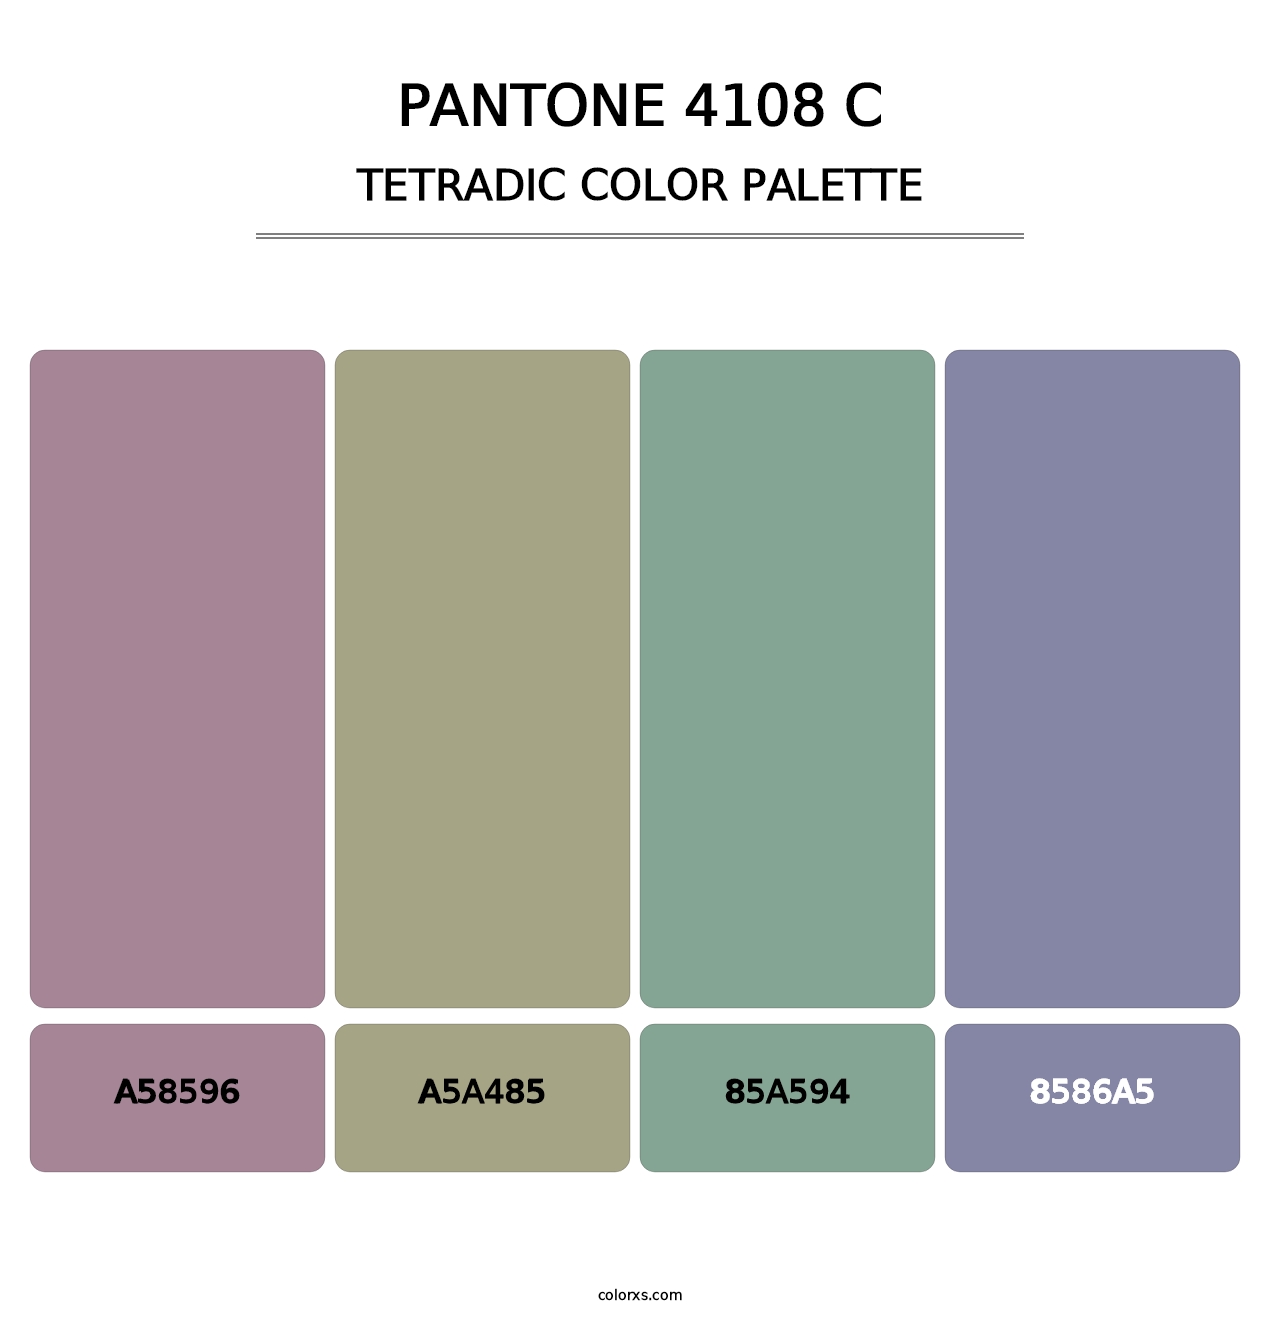 PANTONE 4108 C - Tetradic Color Palette